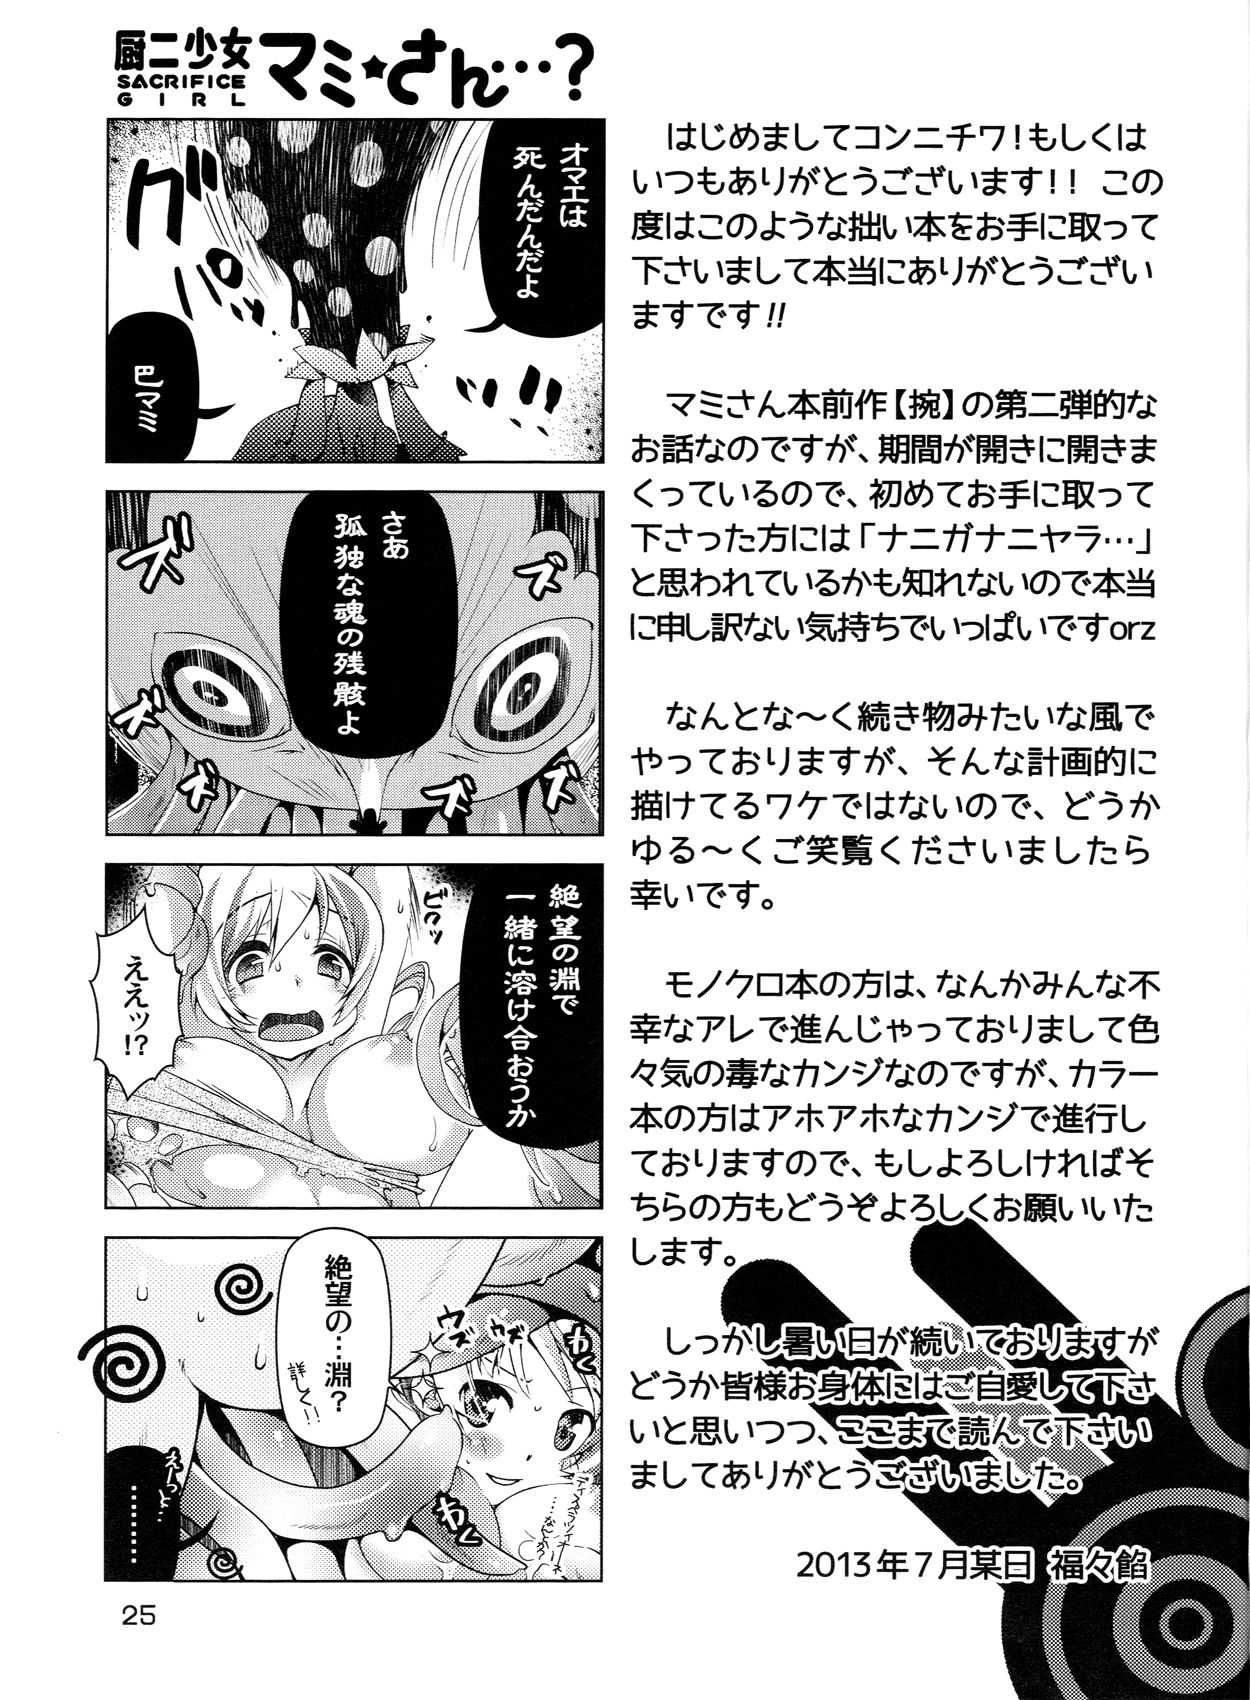 (C84) [BlackBox (Fukufukuan)] Mogeru 2 (Puella Magi Madoka Magica) (C84) [BlackBox (福々餡)] 捥 MOGERU2 (魔法少女まどか☆マギカ)